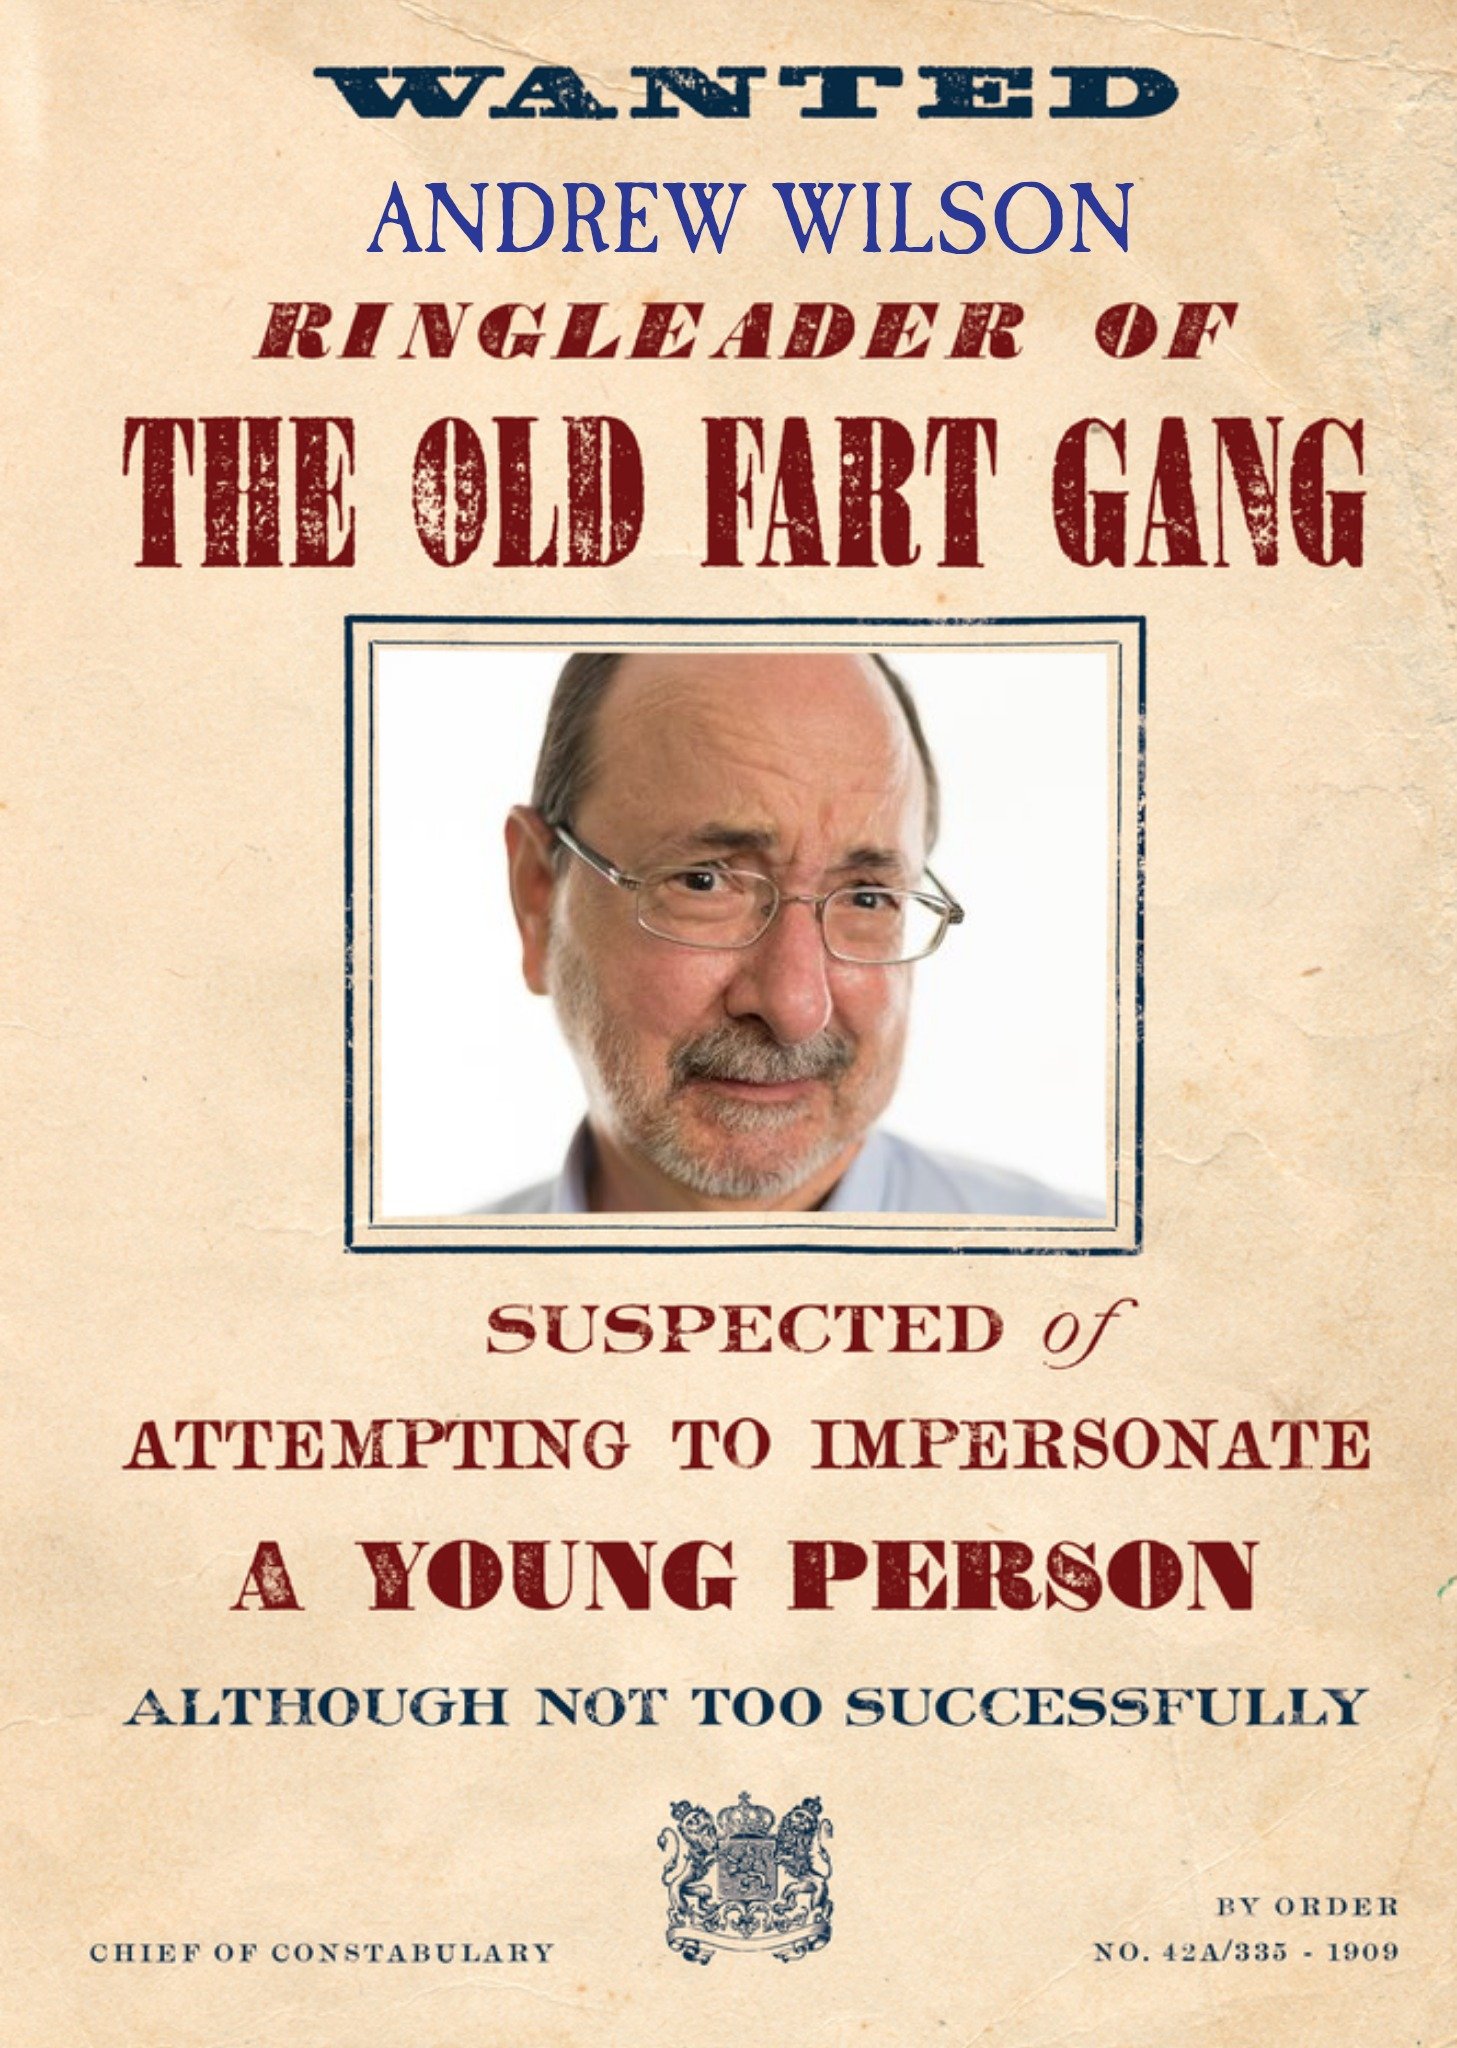 Moonpig Photo Upload Card Wanted Ringleader Of The Old Fart Gang Card Ecard